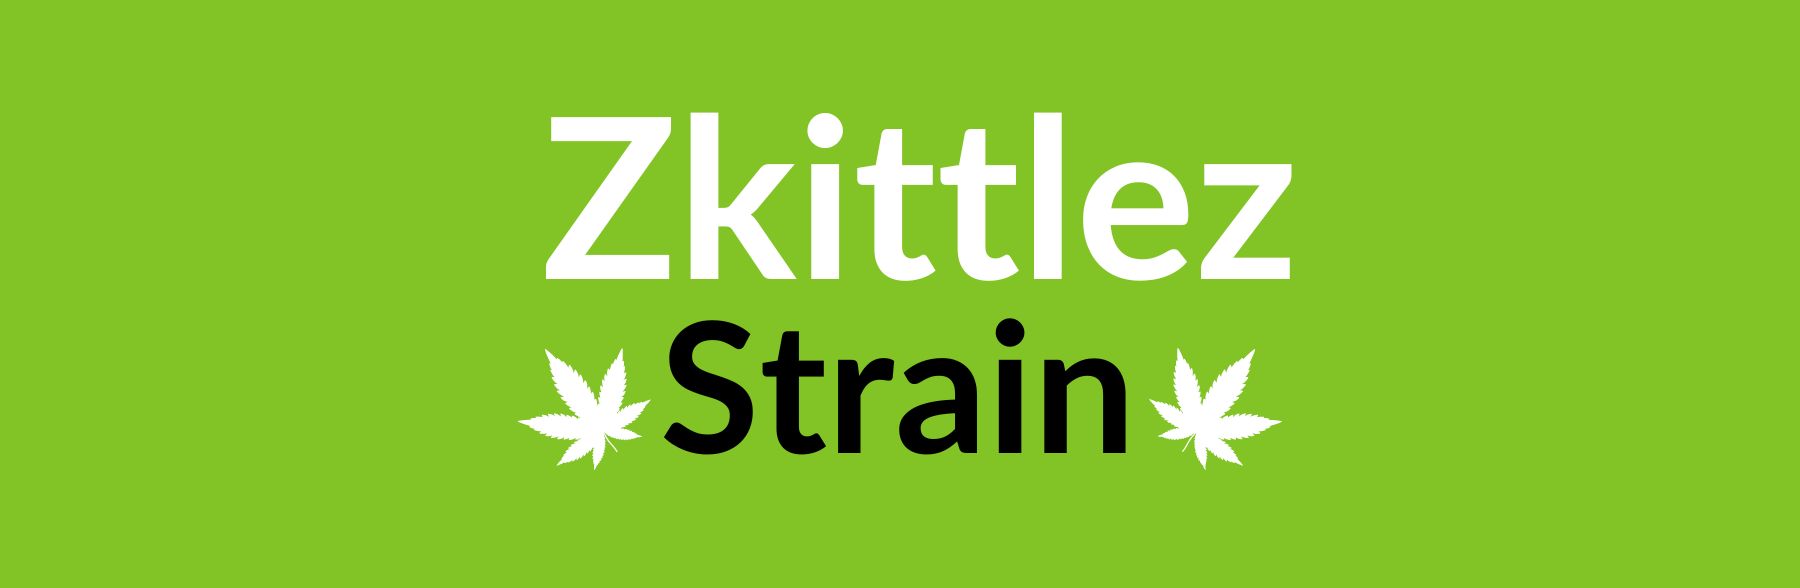 Zkittlez Strain Review & Information